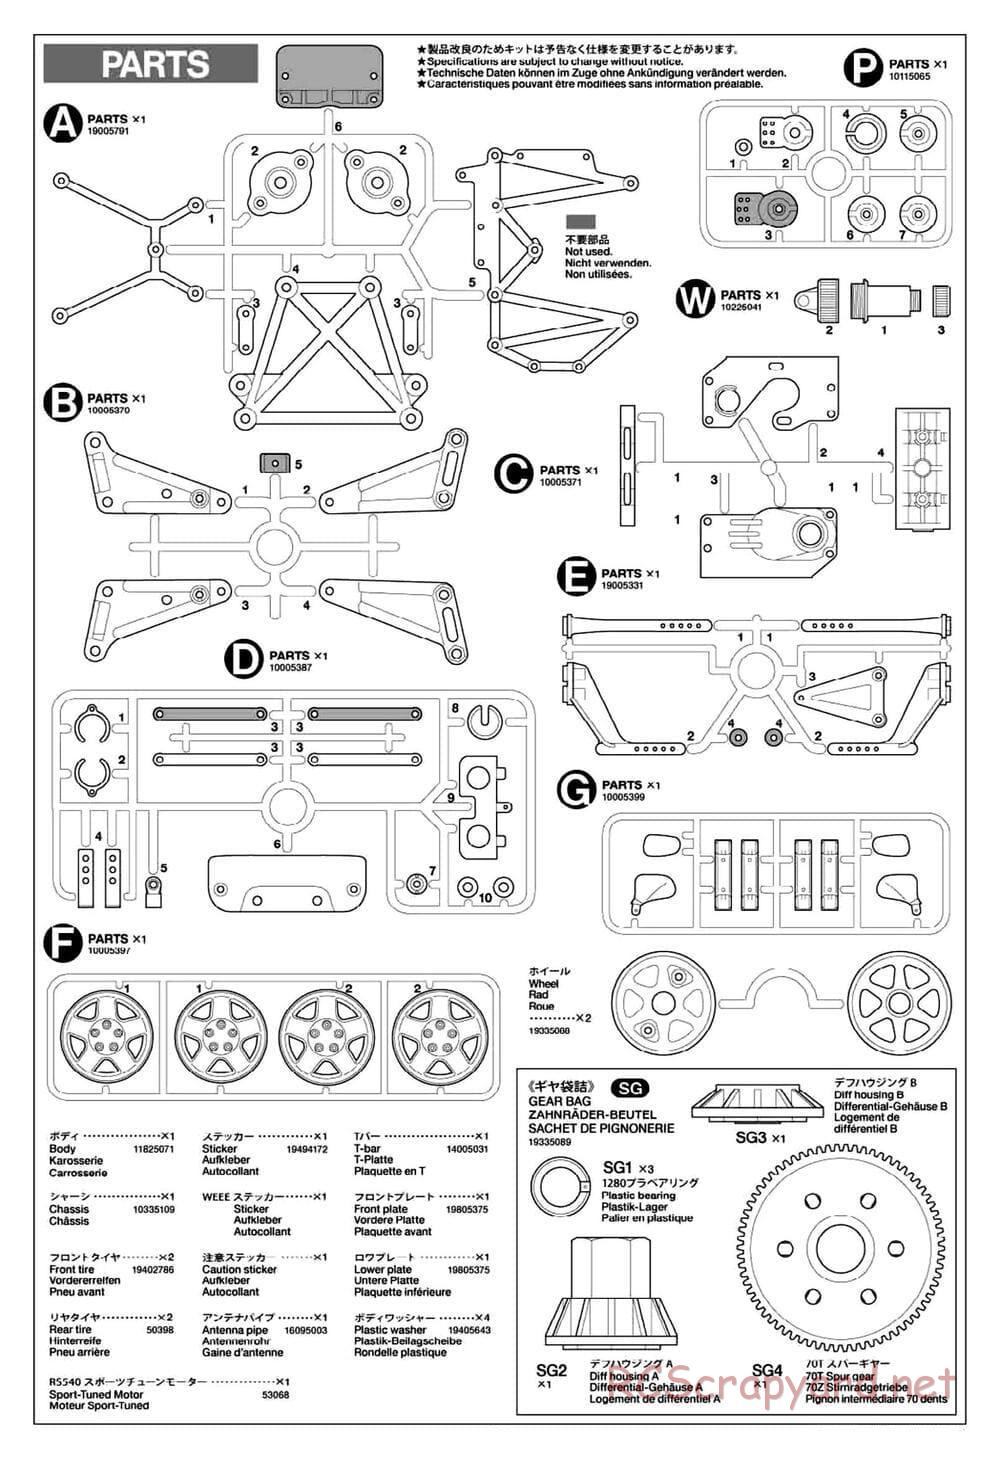 Tamiya - Group-C Chassis - Manual - Page 15